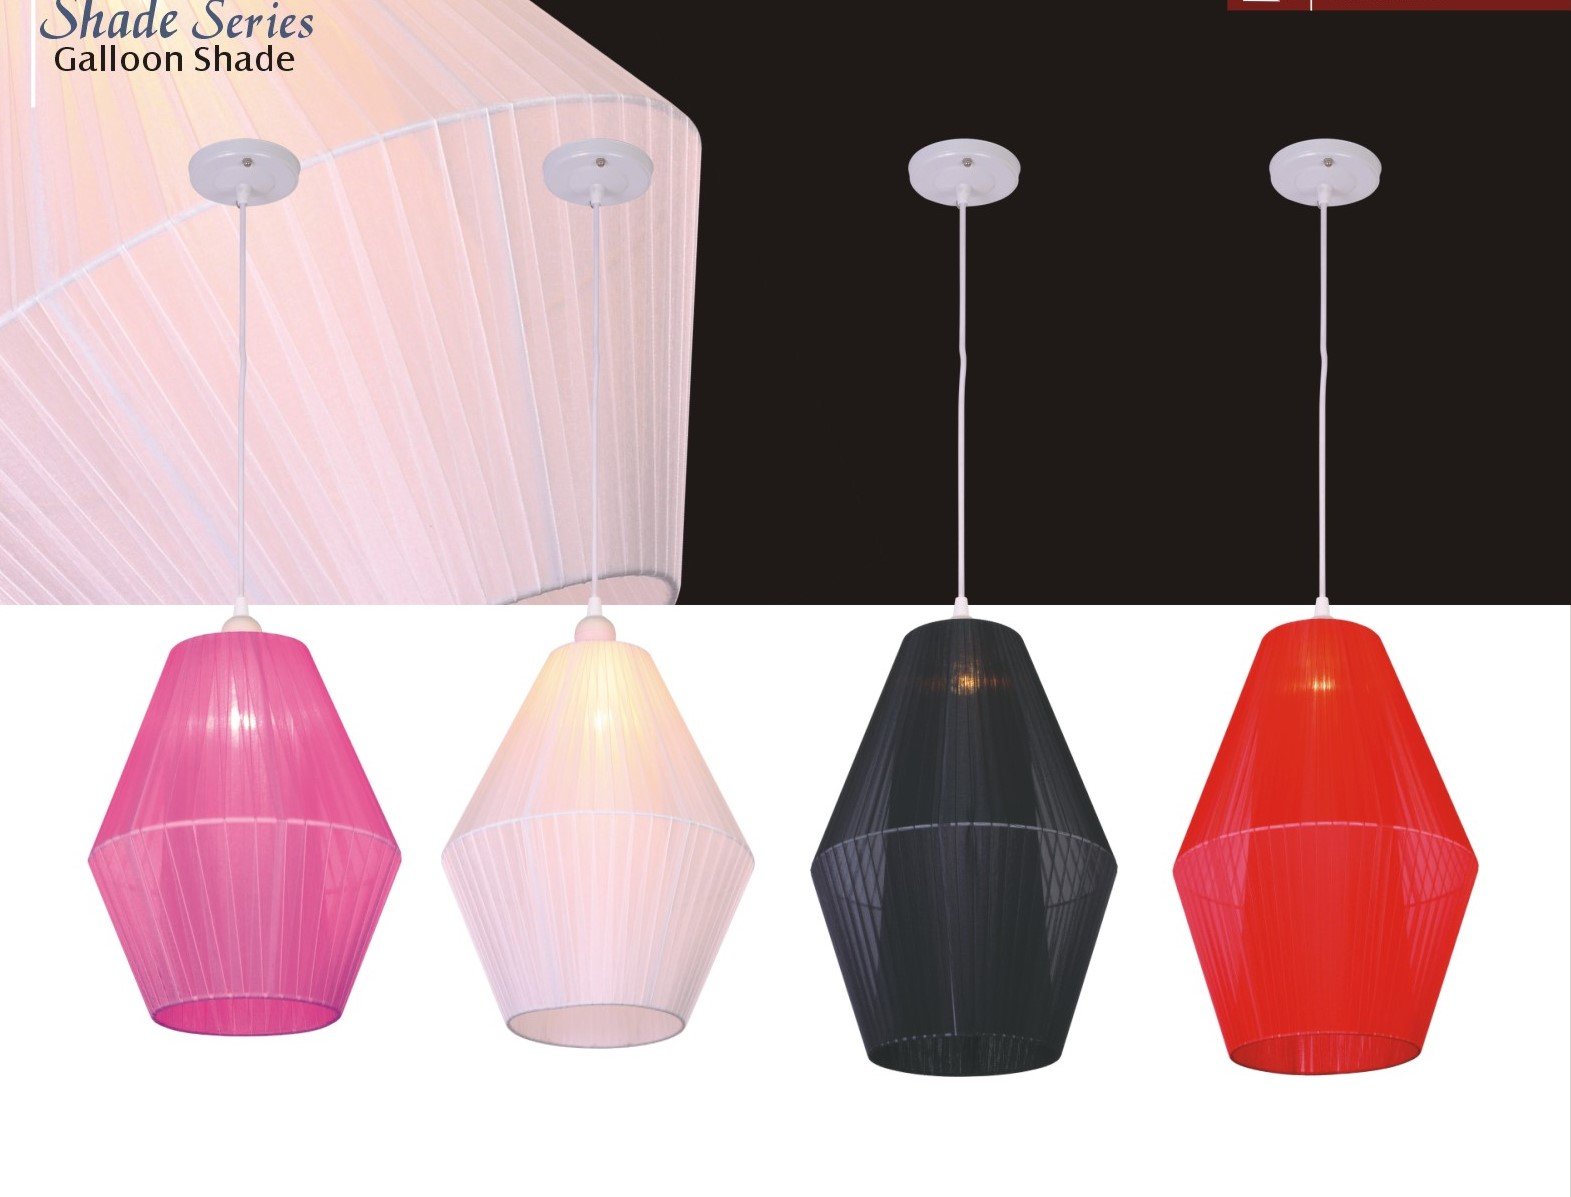 silk ribbon twined fabric lamp shade at customized size from China shade factory MEGA light